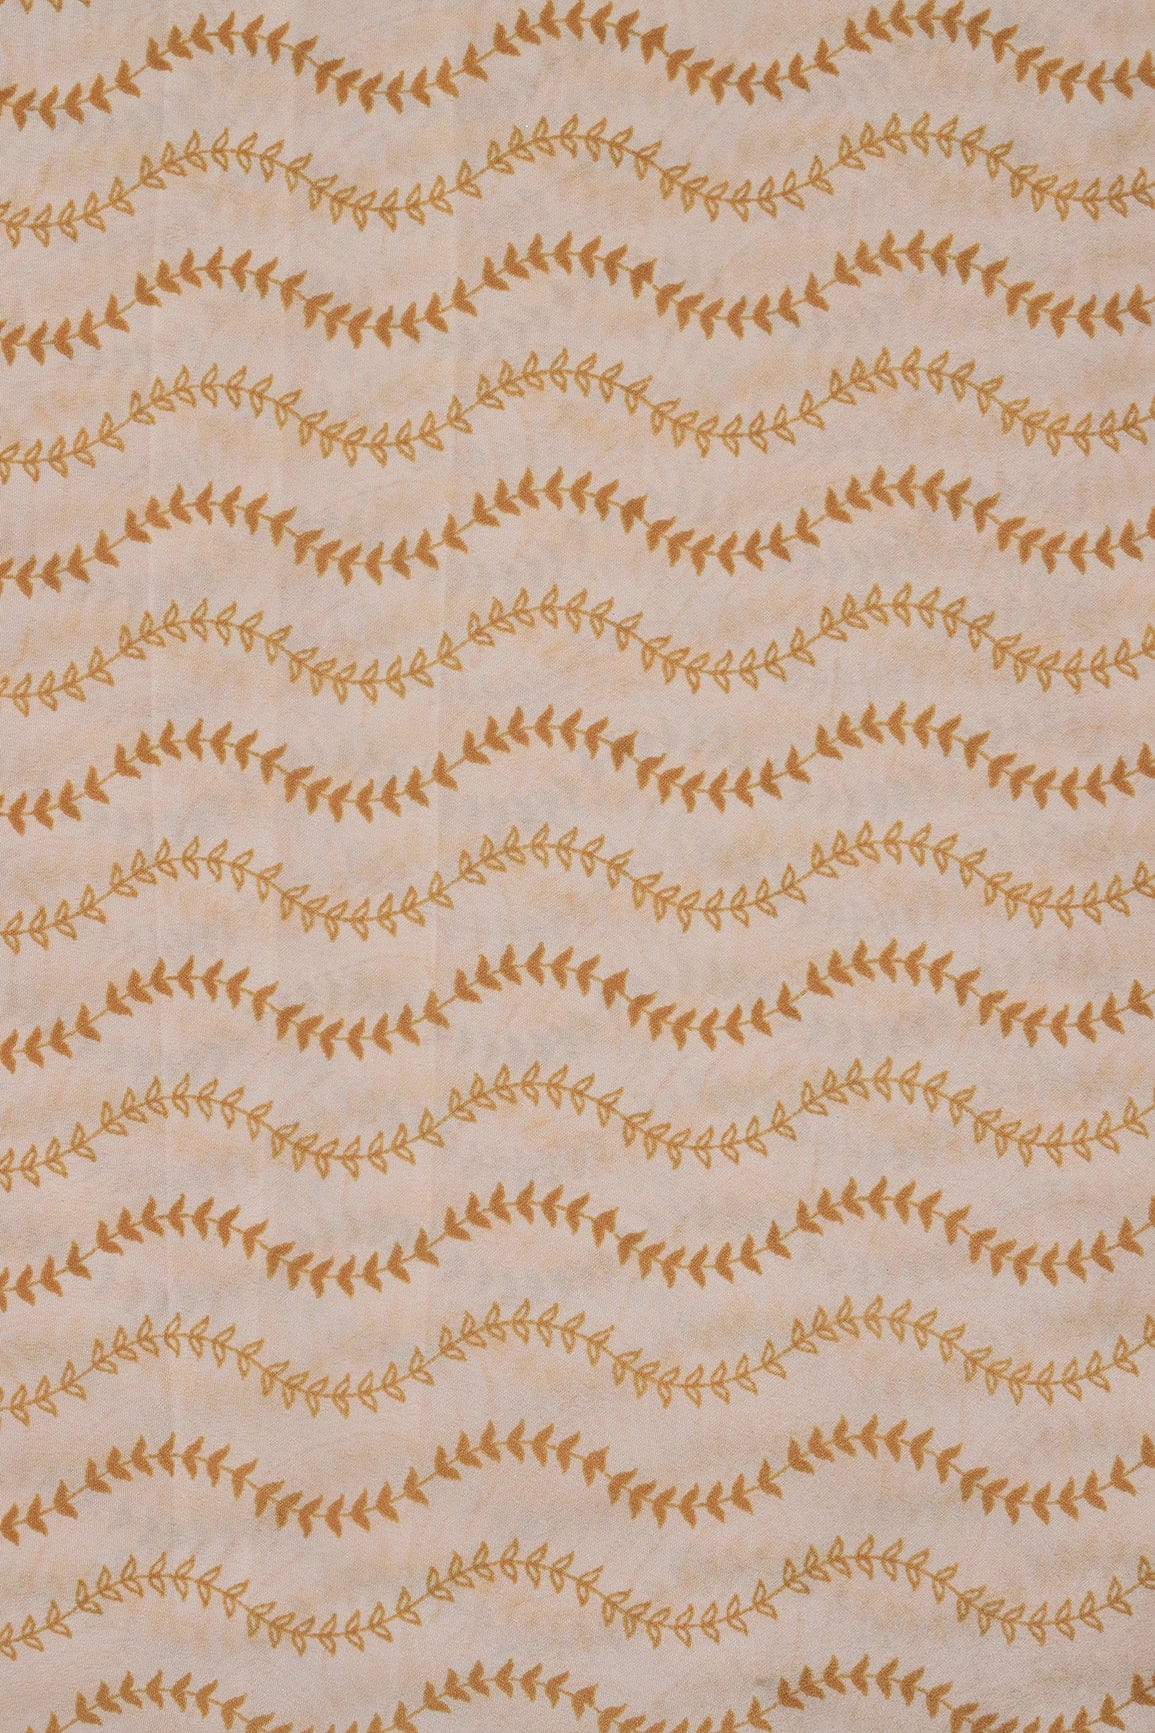 doeraa Prints Mustard Yellow Wavy Pattern Digital Print On Cream French Crepe Fabric